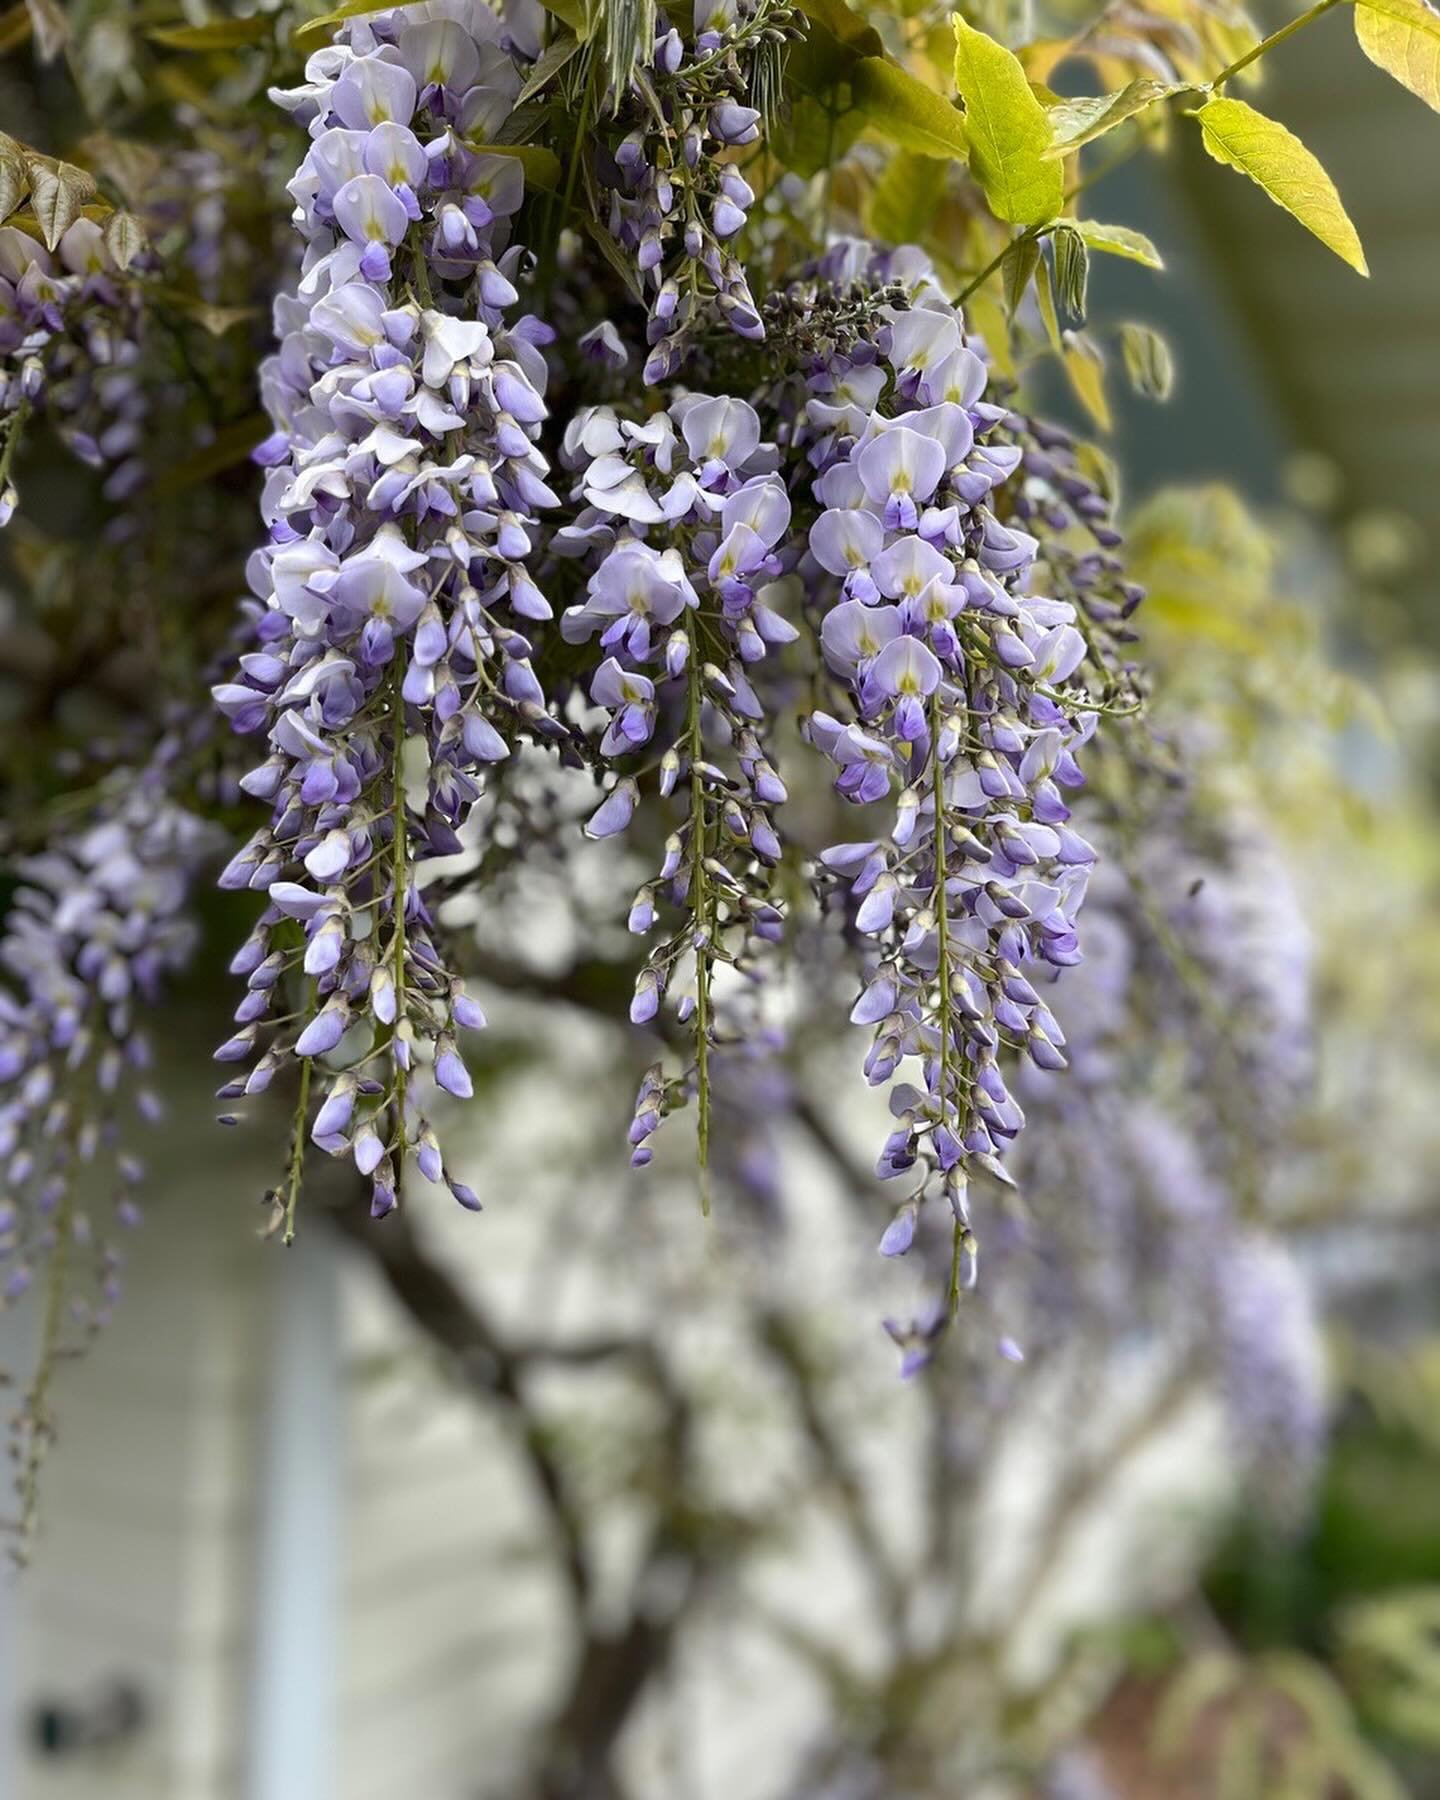 It&rsquo;s not quite lavender season yet, but purple blooms are all around the farm!💜May 1st marks 50 days until Lavender Season begins on June 20th!! See bio for more 

#lavenderhillfarm #vashonisland #lavenderfarm #organiclavender